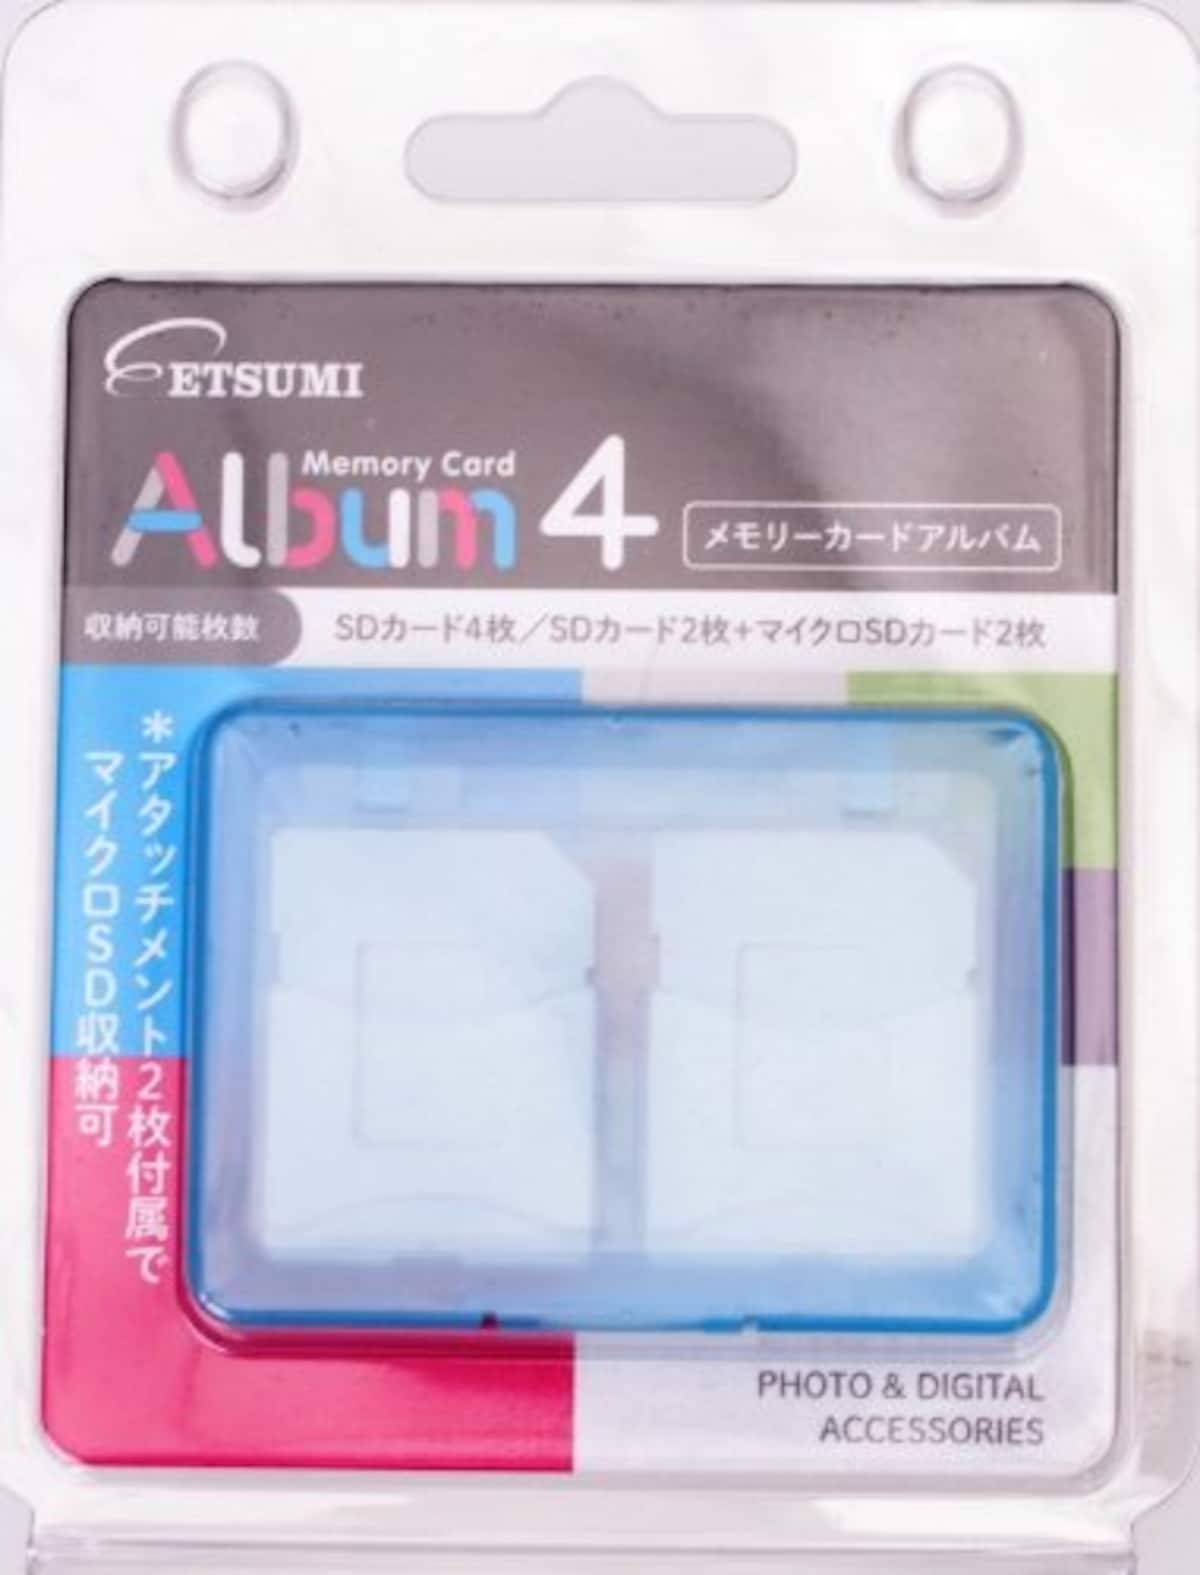  ETSUMI メディアカードケース メモリーカードアルバム SDカード4枚用 ブルー E-5190画像4 